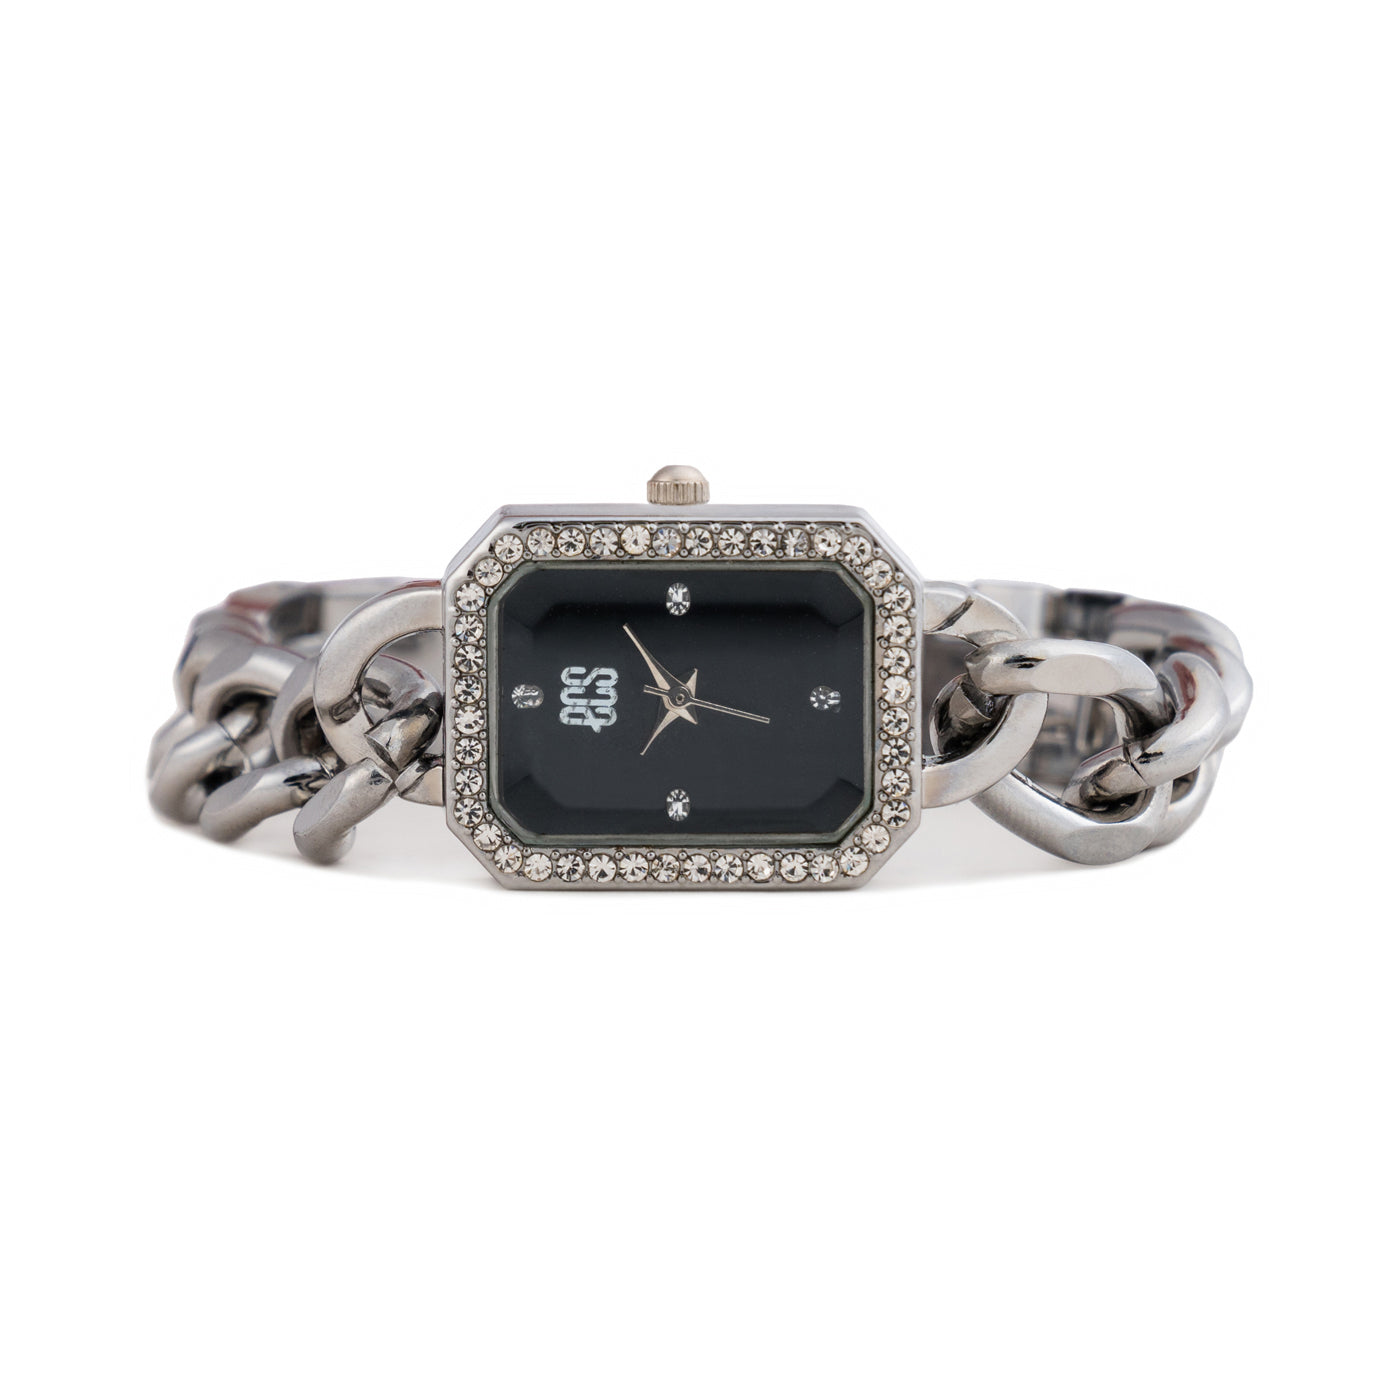 diamondize-bezel-watch